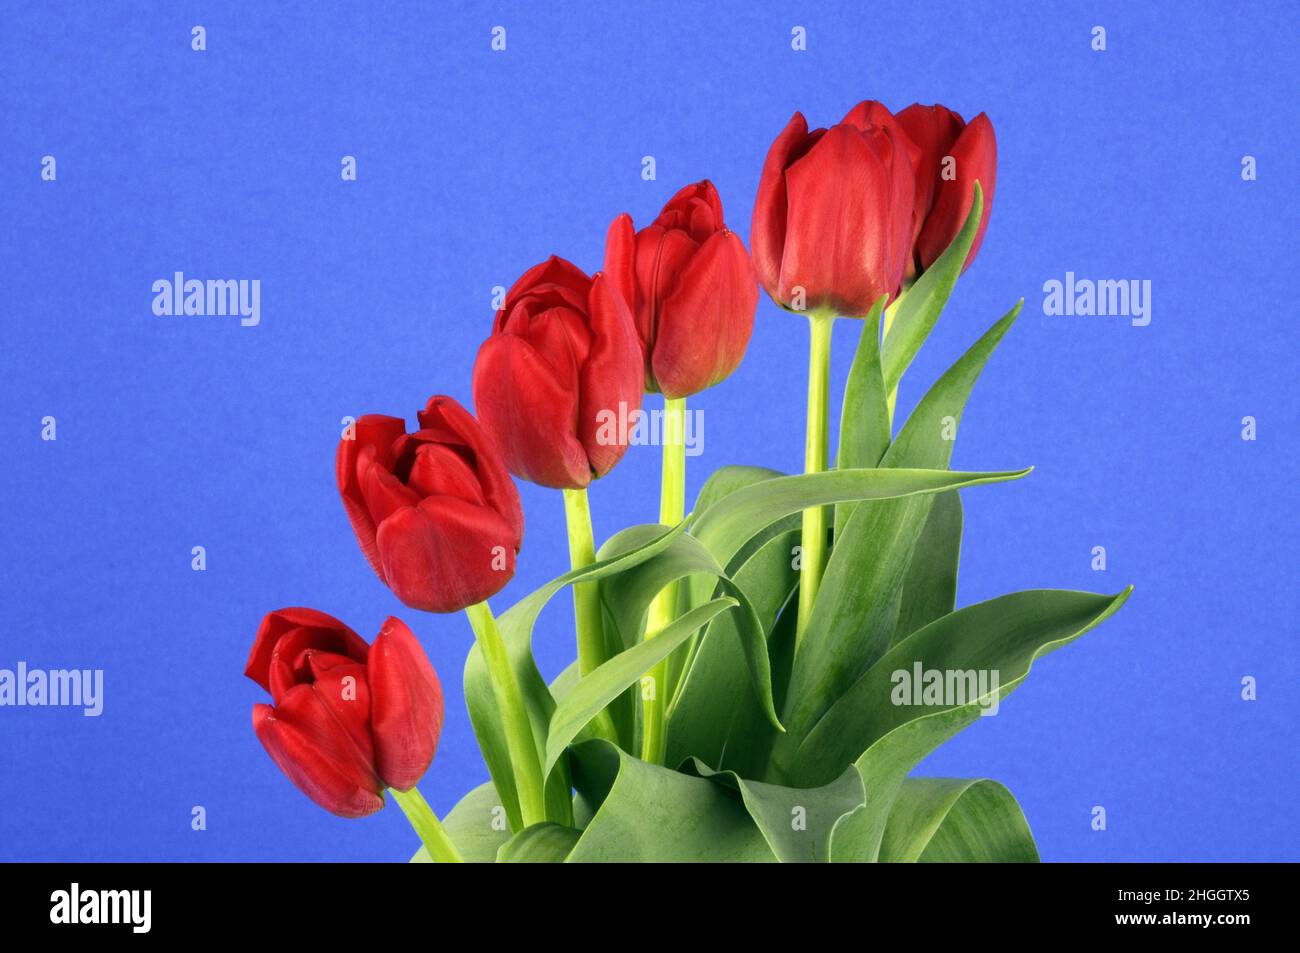 common garden tulip (Tulipa gesneriana), bunch of tulips in front of blue background Stock Photo